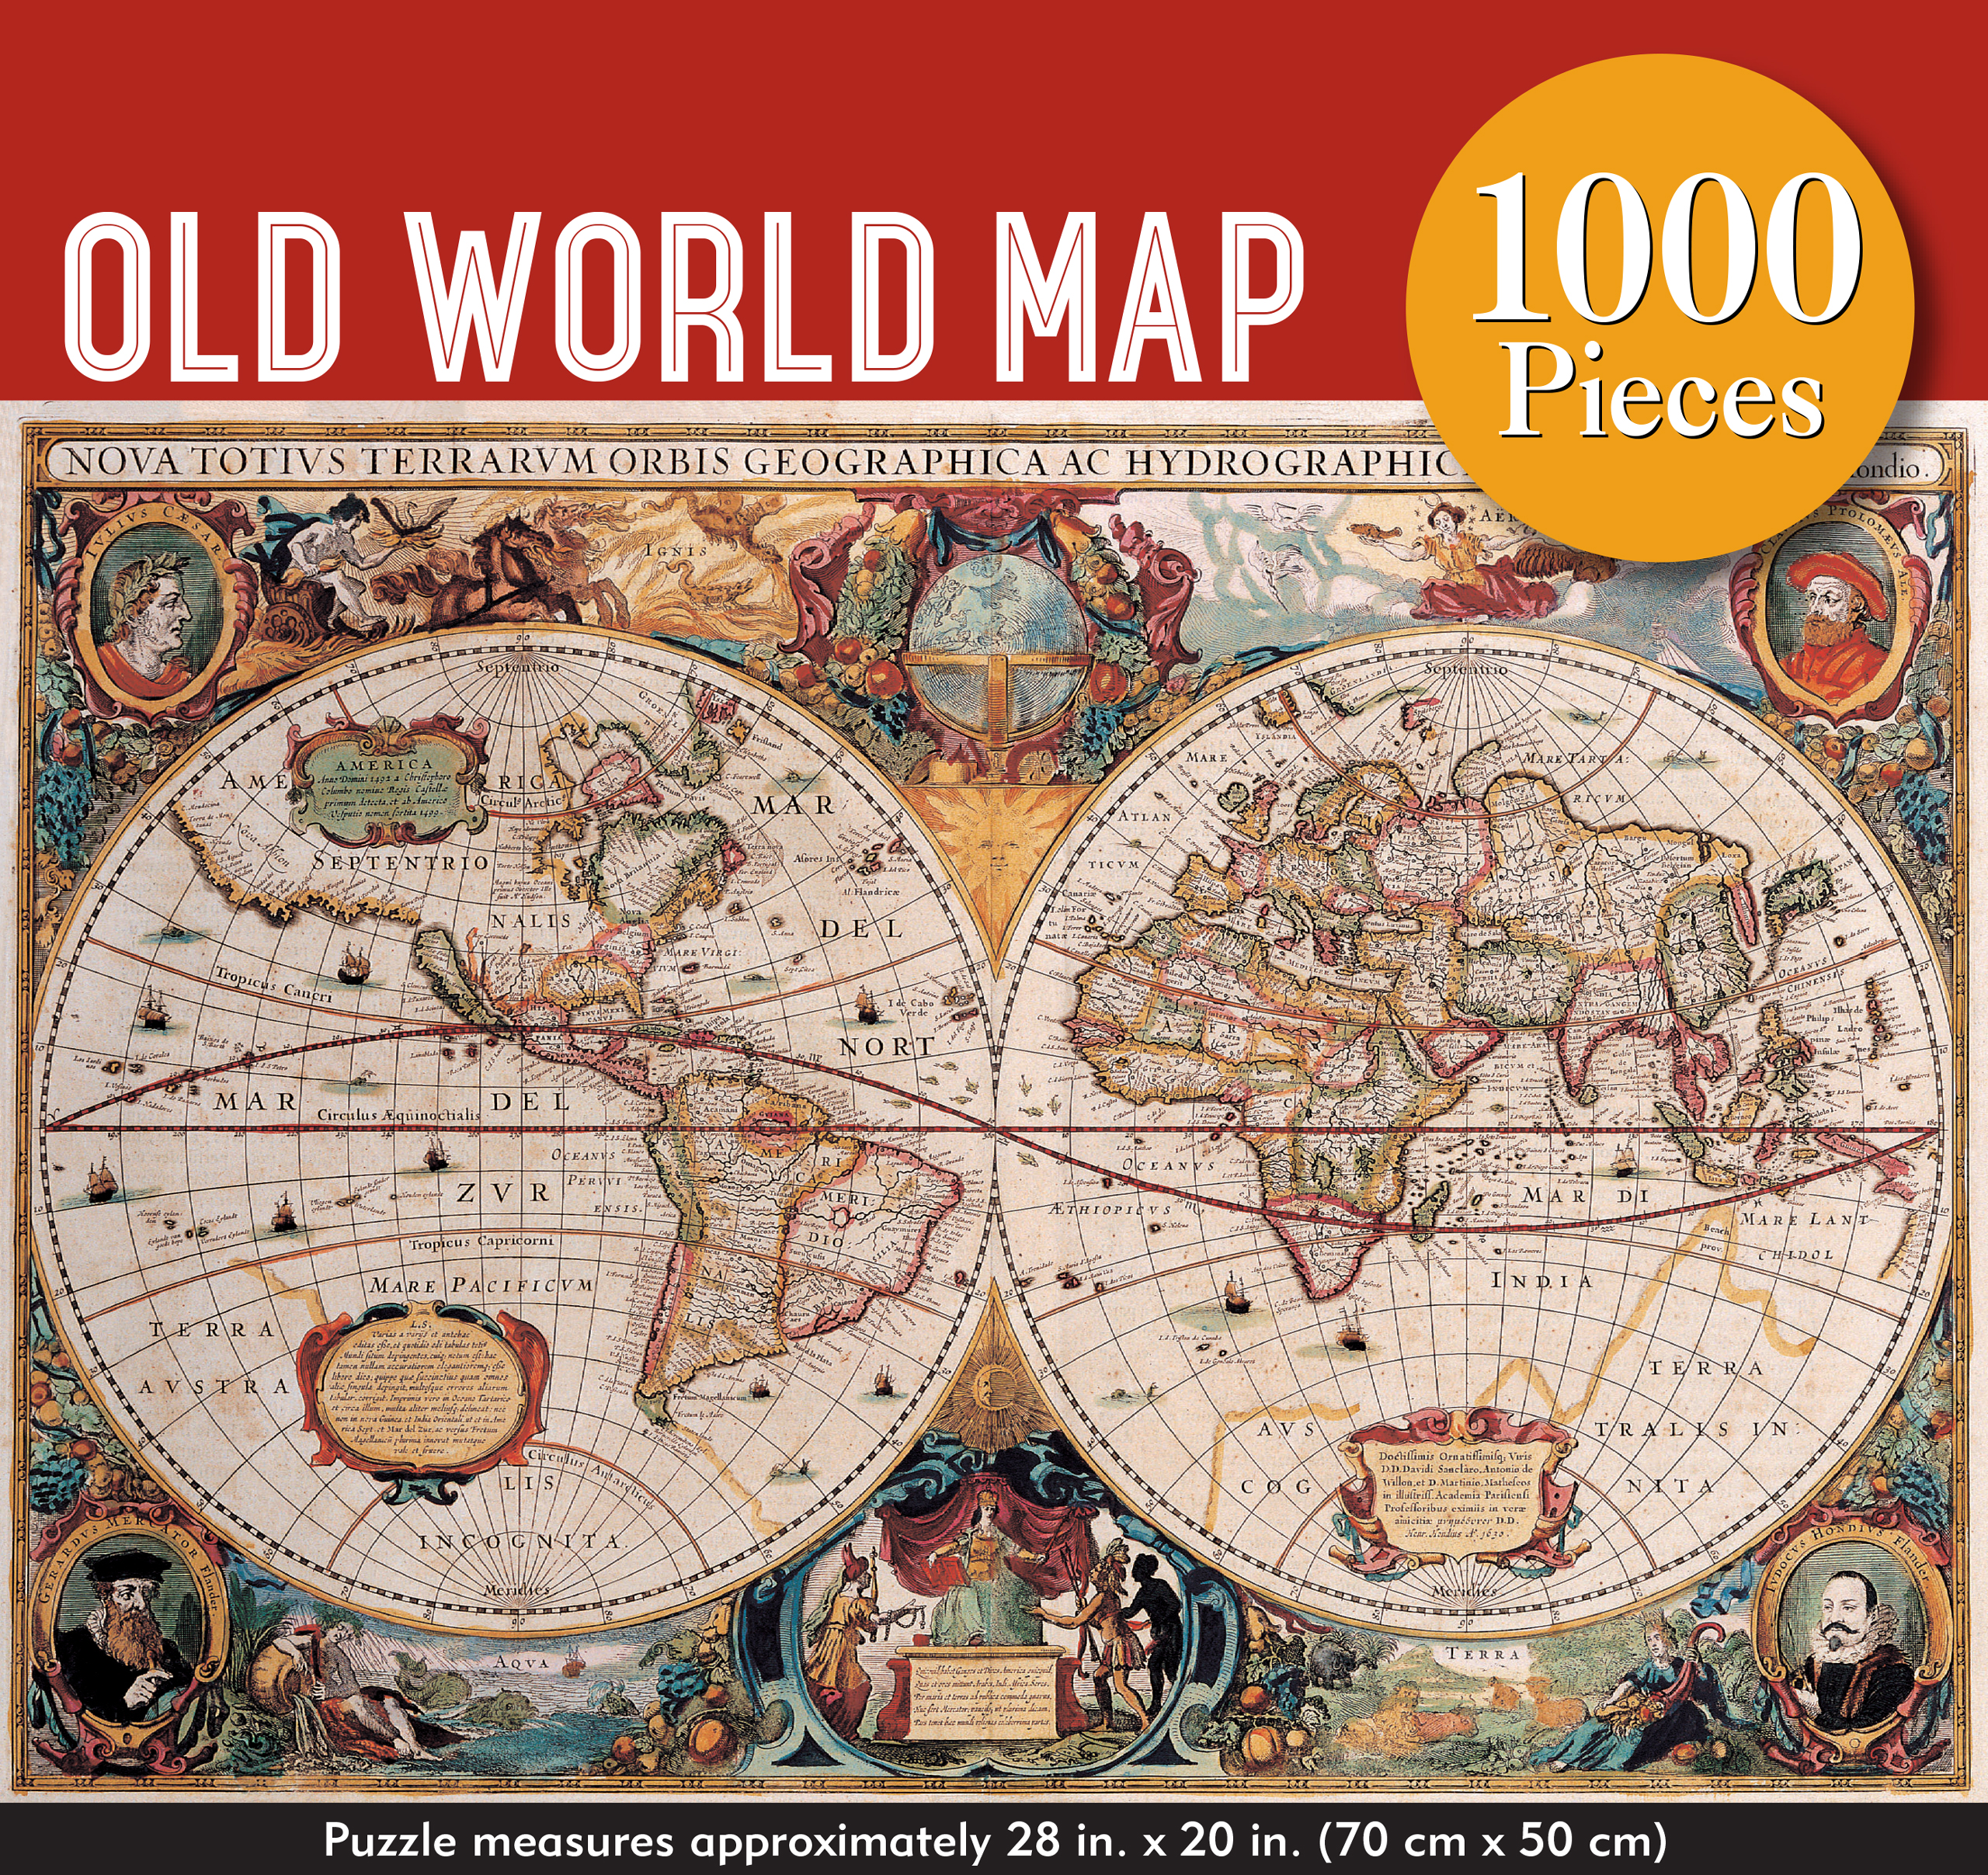 Rompecabezas 1000 piezas Mundo Antiguo